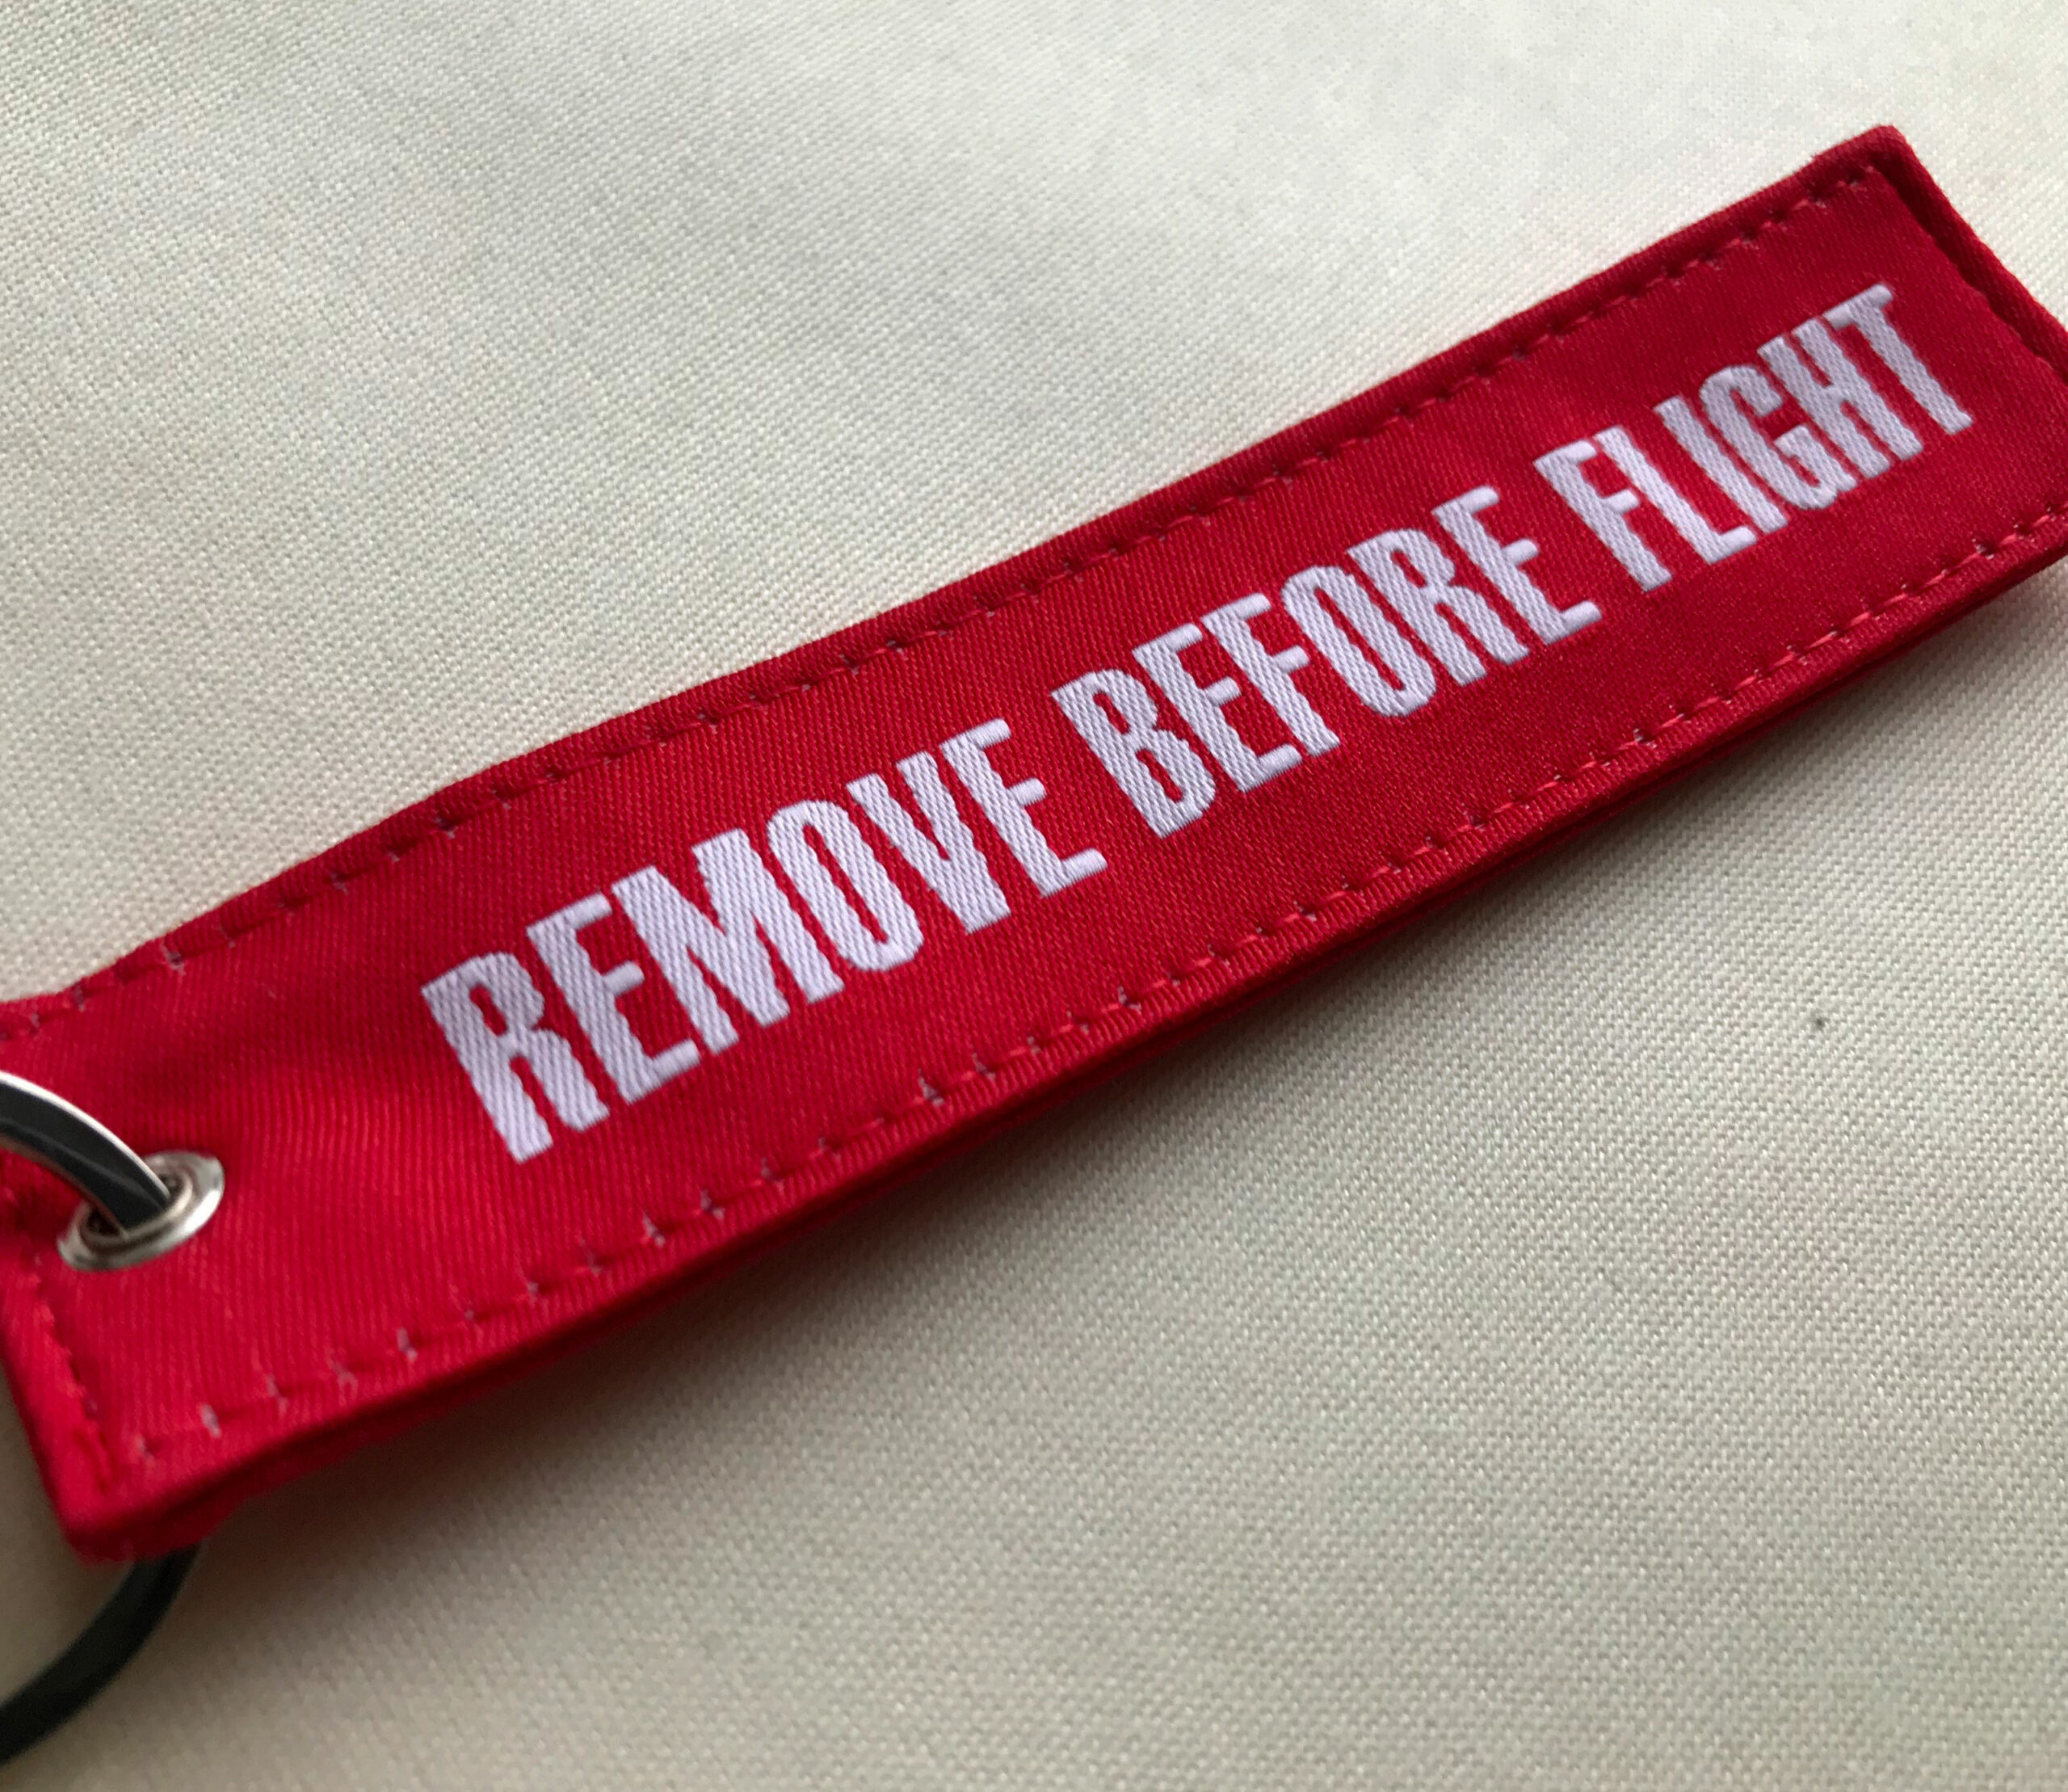 remove before flight